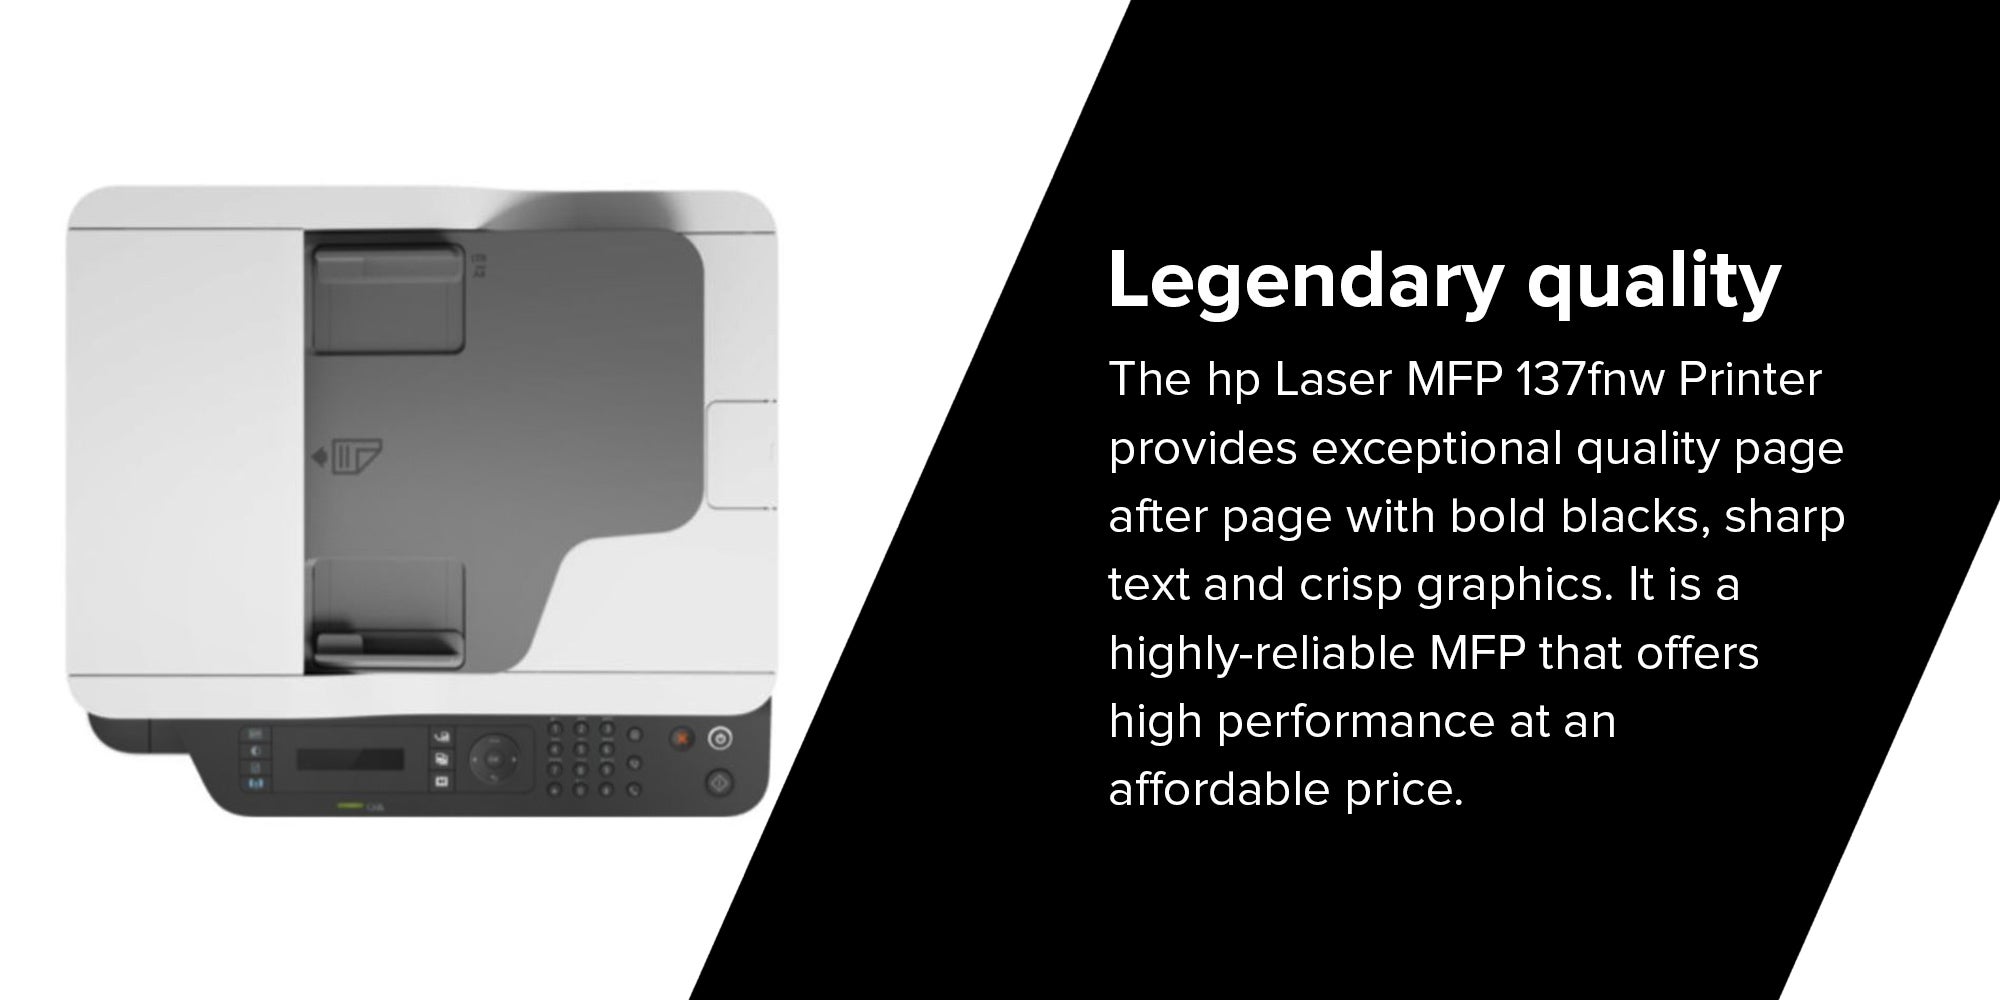 Impresora HP LaserJet 137fnw Multifuncional 4ZB84A - Laser Print